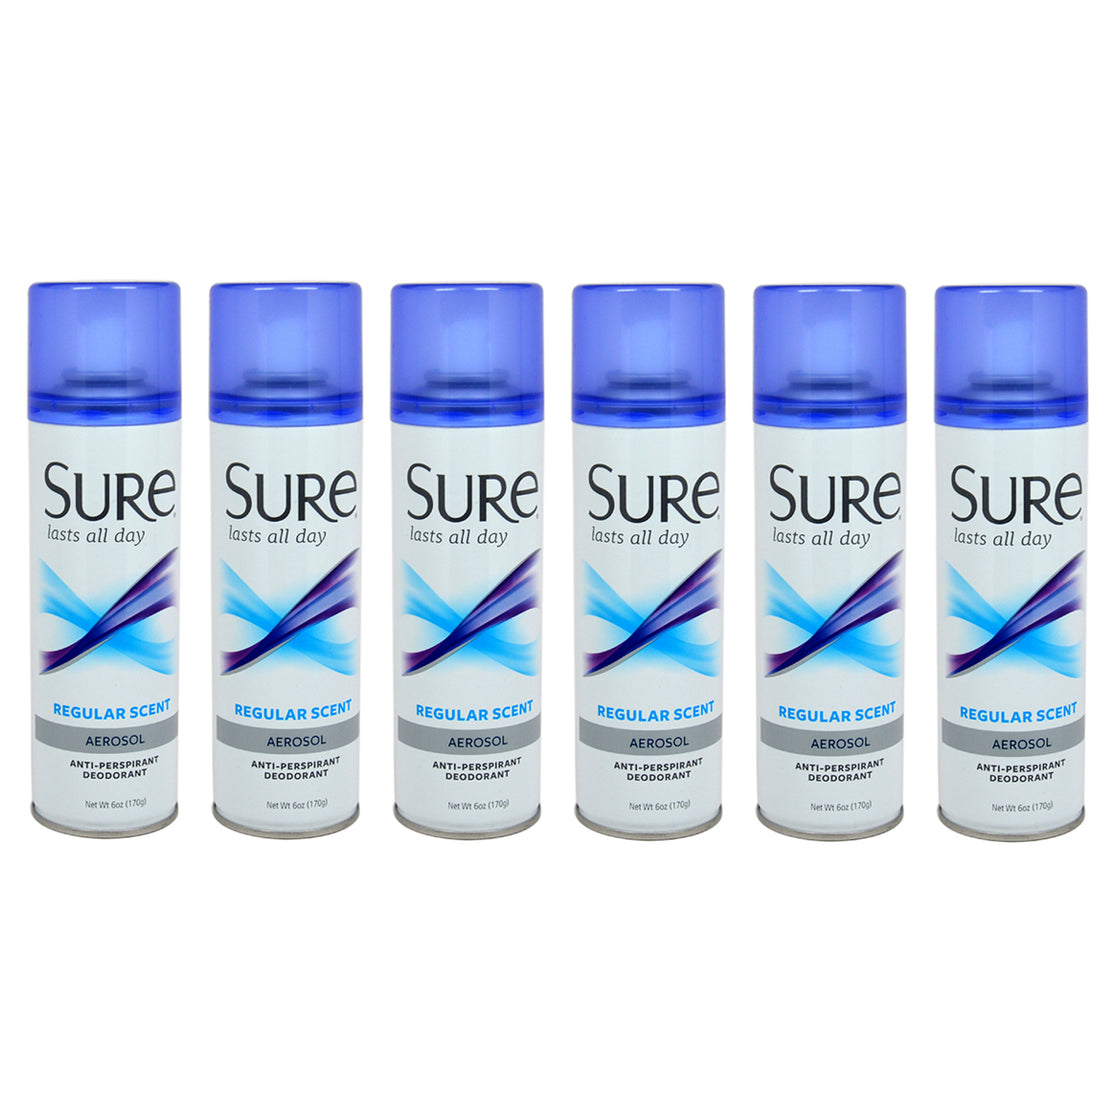 Aerosol Regular Scent Anti-Perspirant and Deodorant by Sure for Unisex - 6 oz Deodorant Spray - Pack of 6